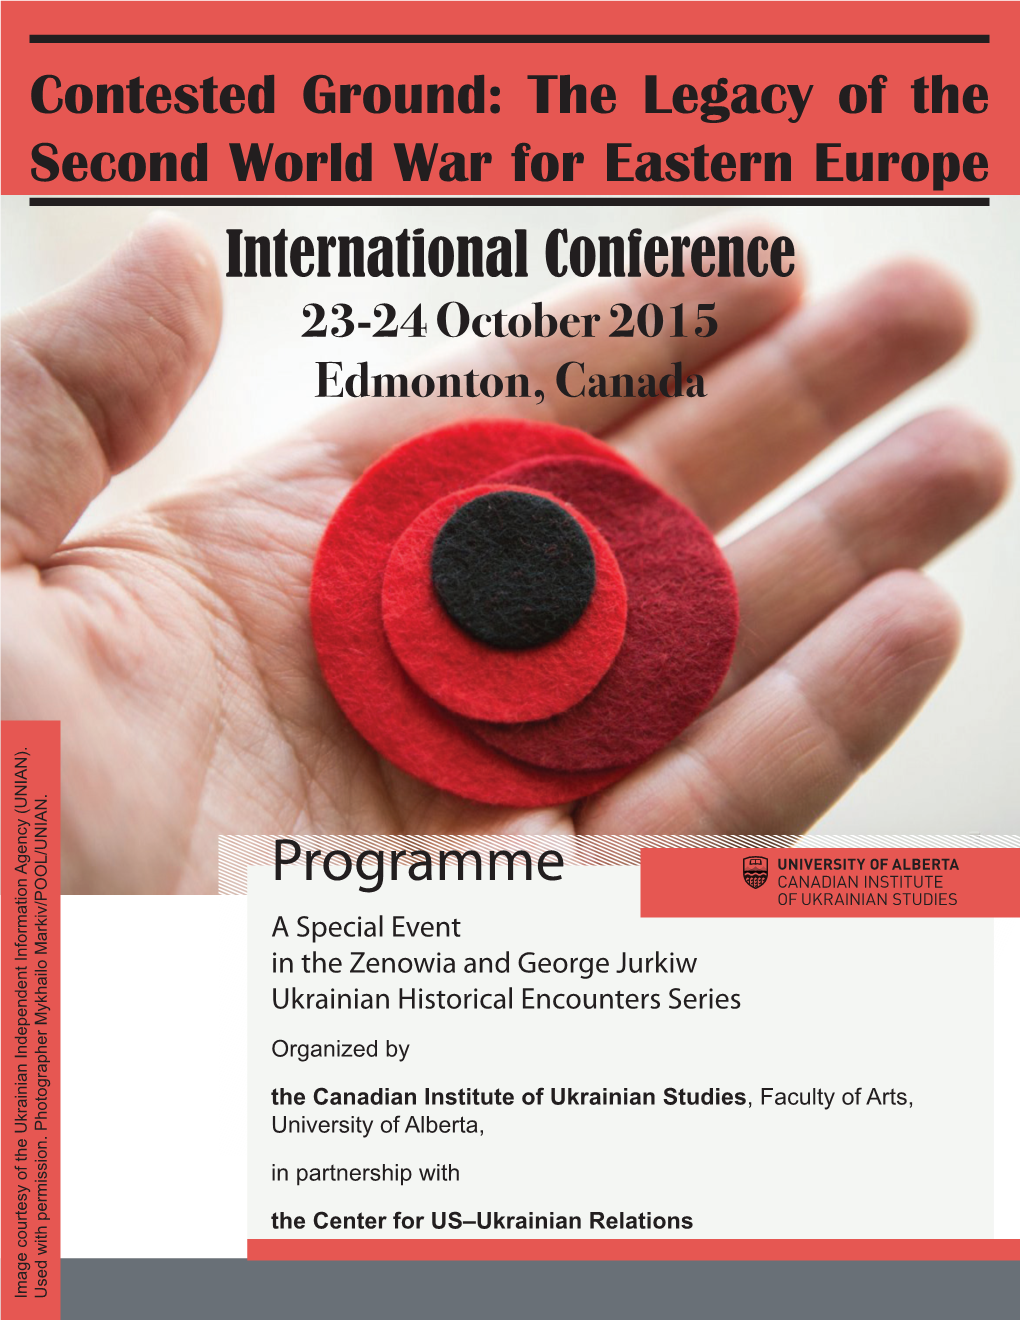 International Conference Programme